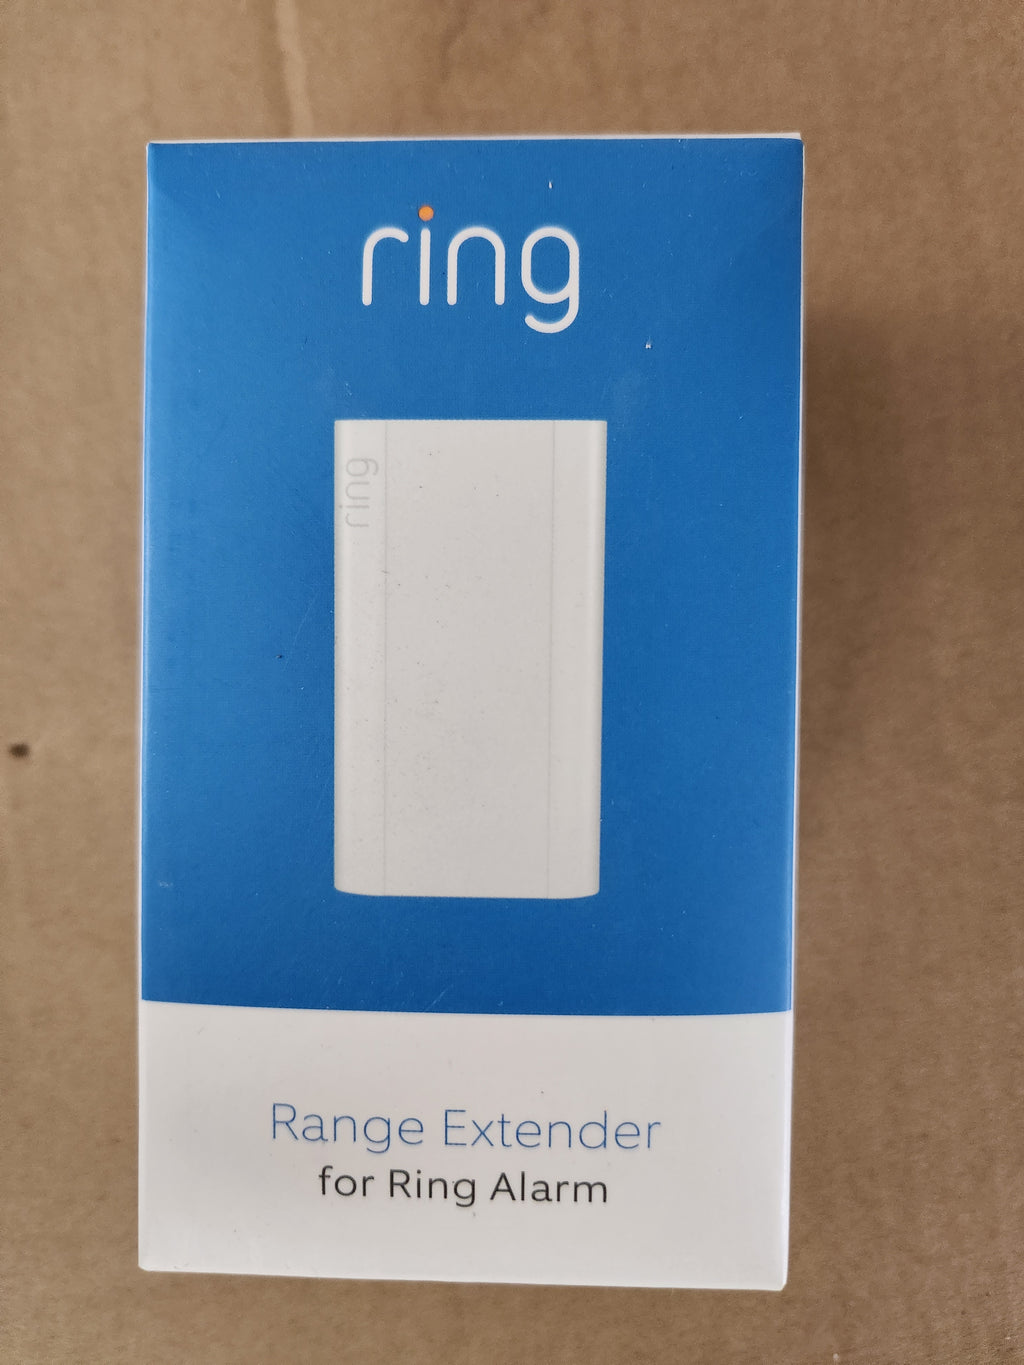 How To Set Up Ring Alarm Range Extender 